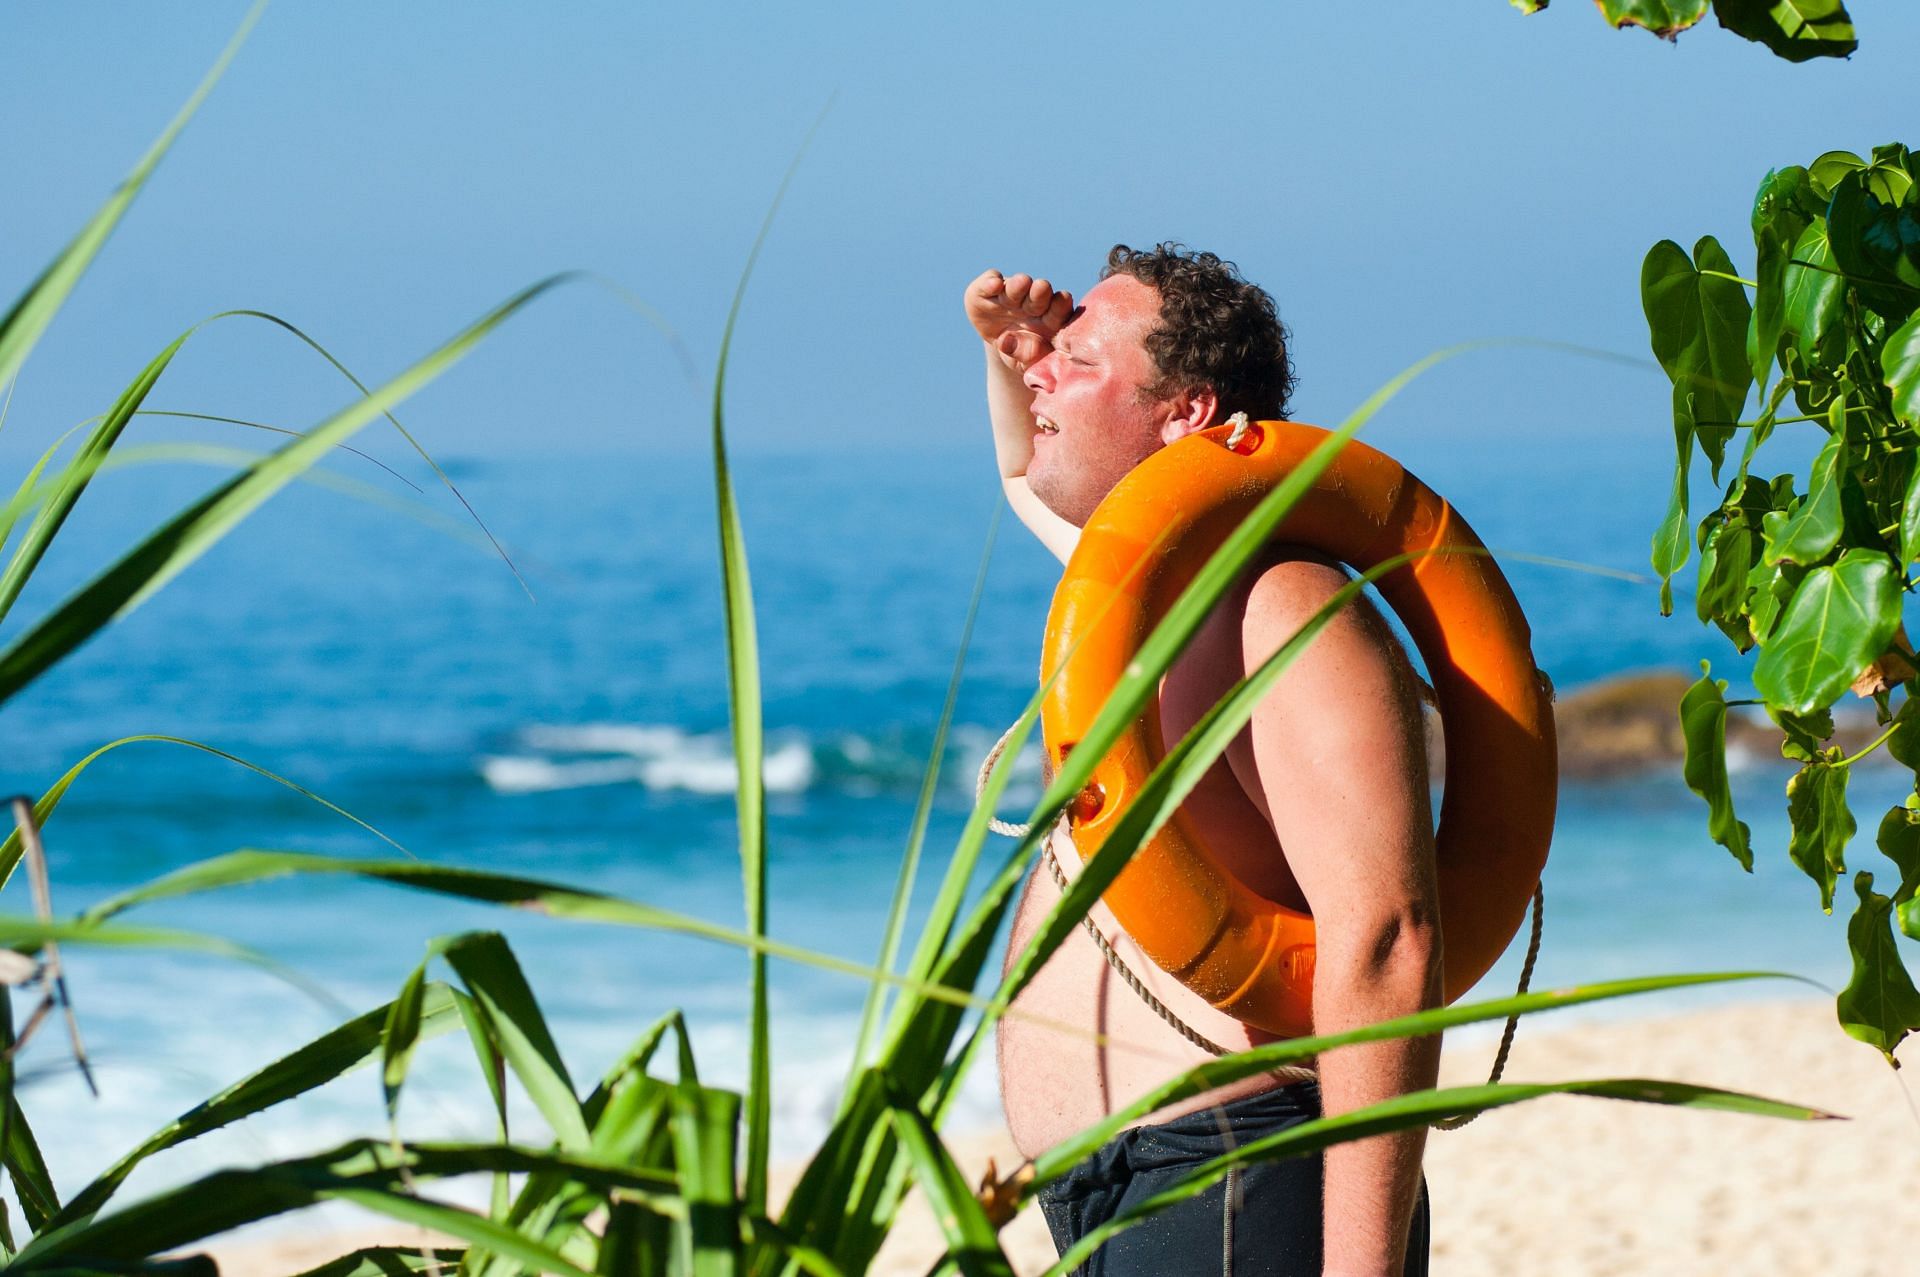 Apart from tanning, sunbath can cause burned skin. (Image via Pexels/ Oleksandr Canary Islands)